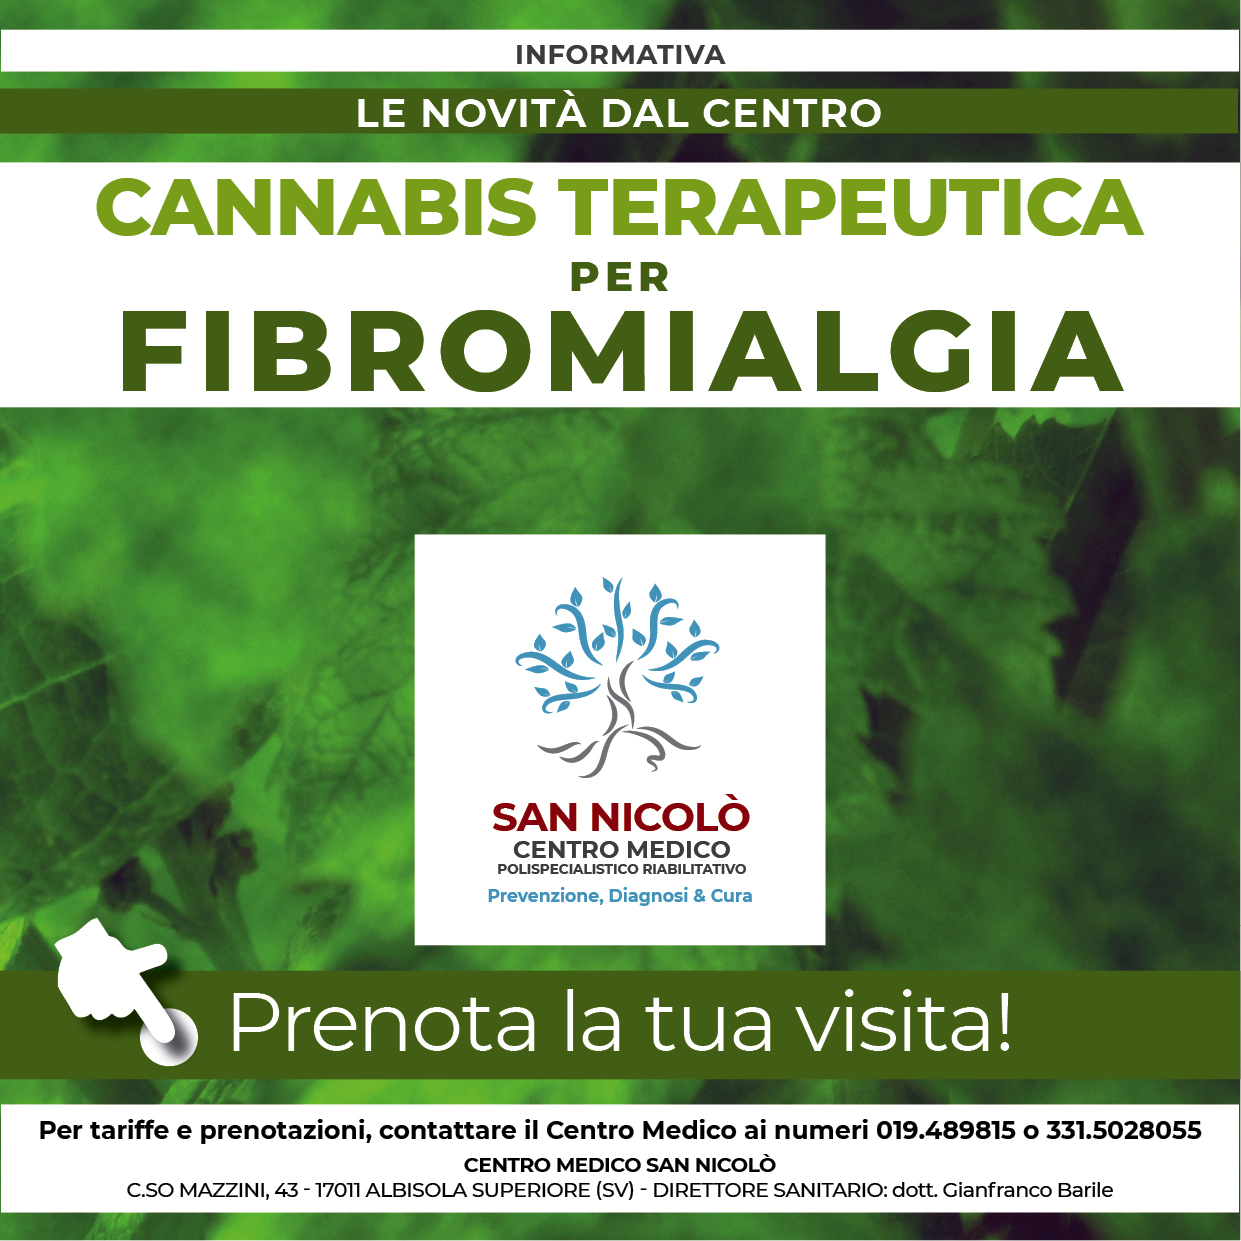 Cannabis terapeutica per fibromialgia